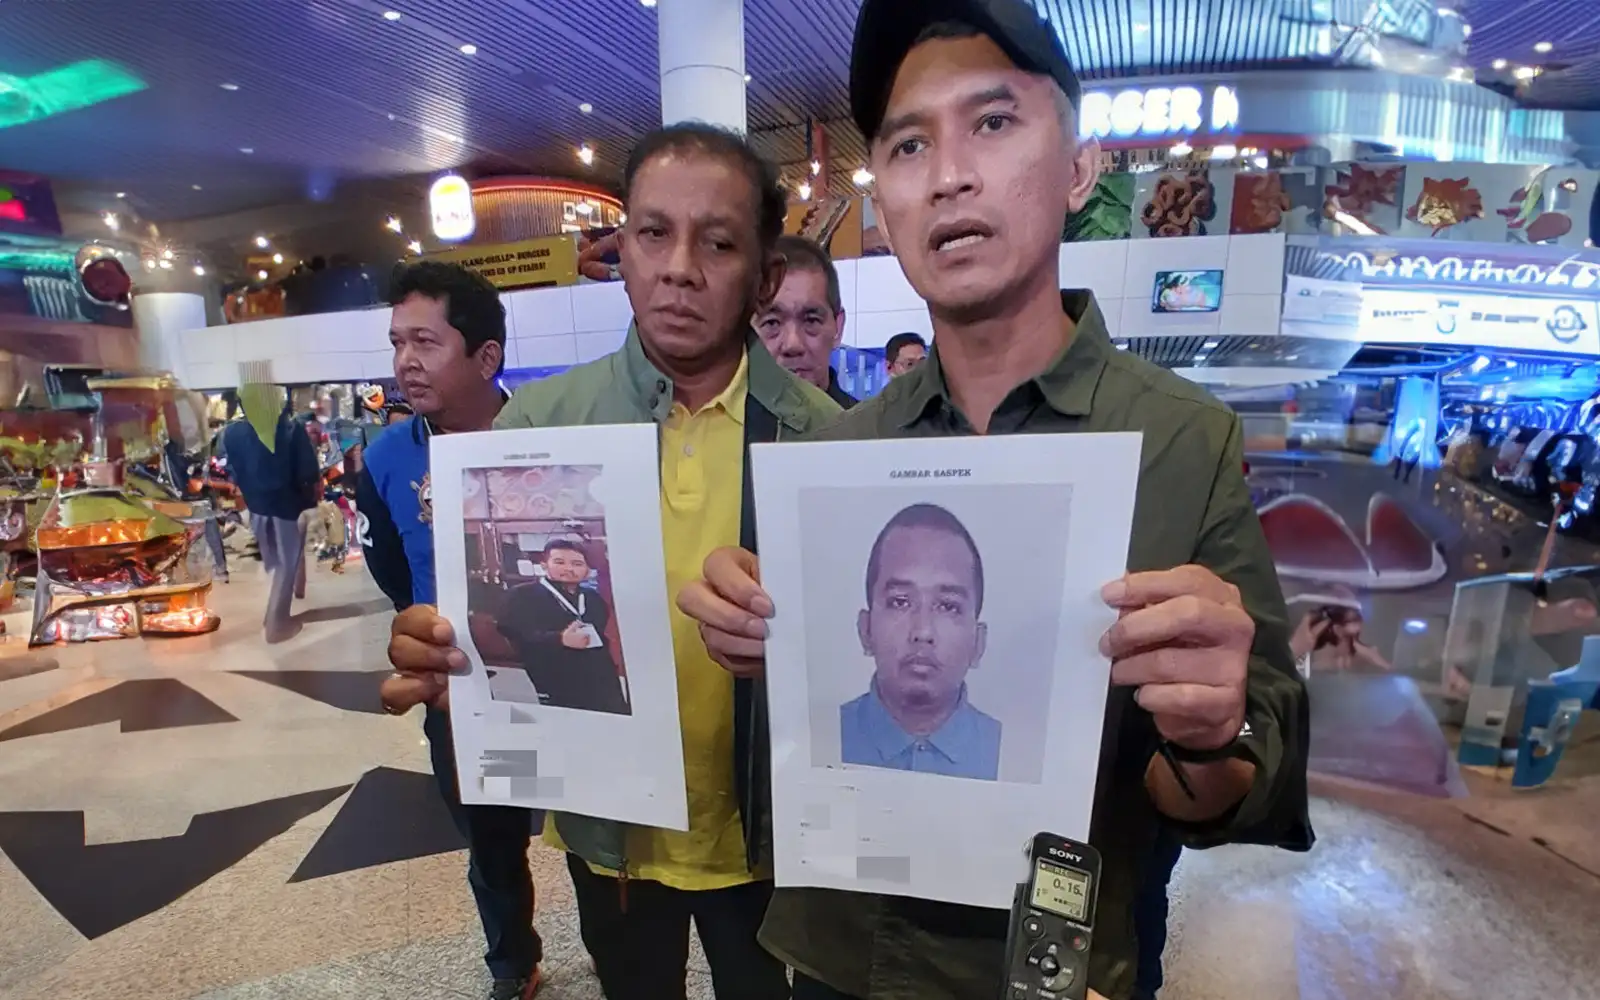 photo of shooting suspect sent to border points, thai authorities